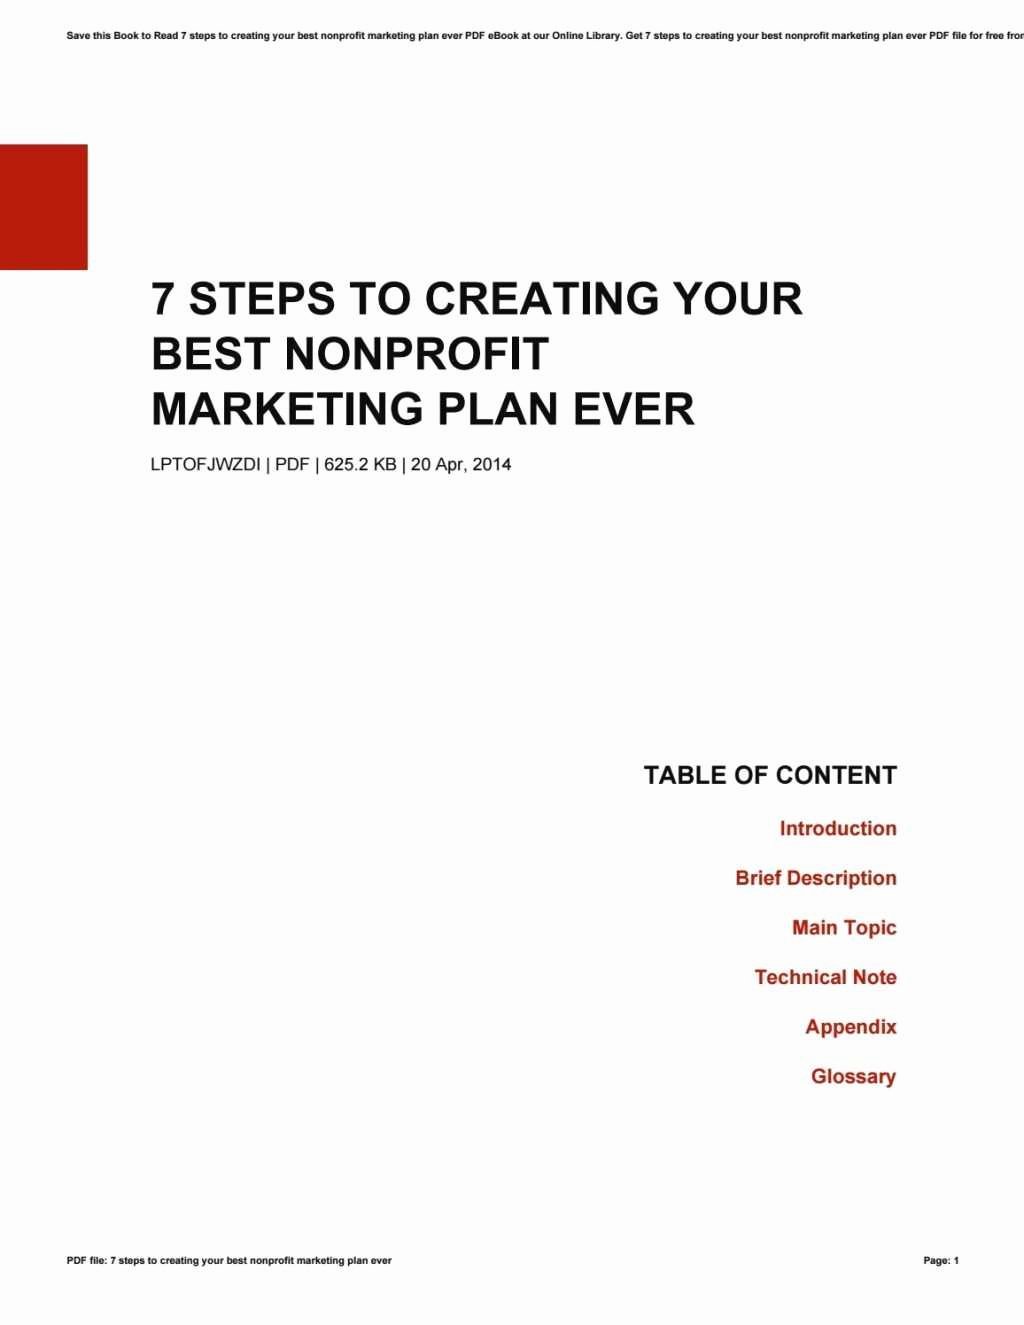 Nonprofit Marketing Plan Template Best Of Fresh Sample Strategic Plan Nonprofit organization